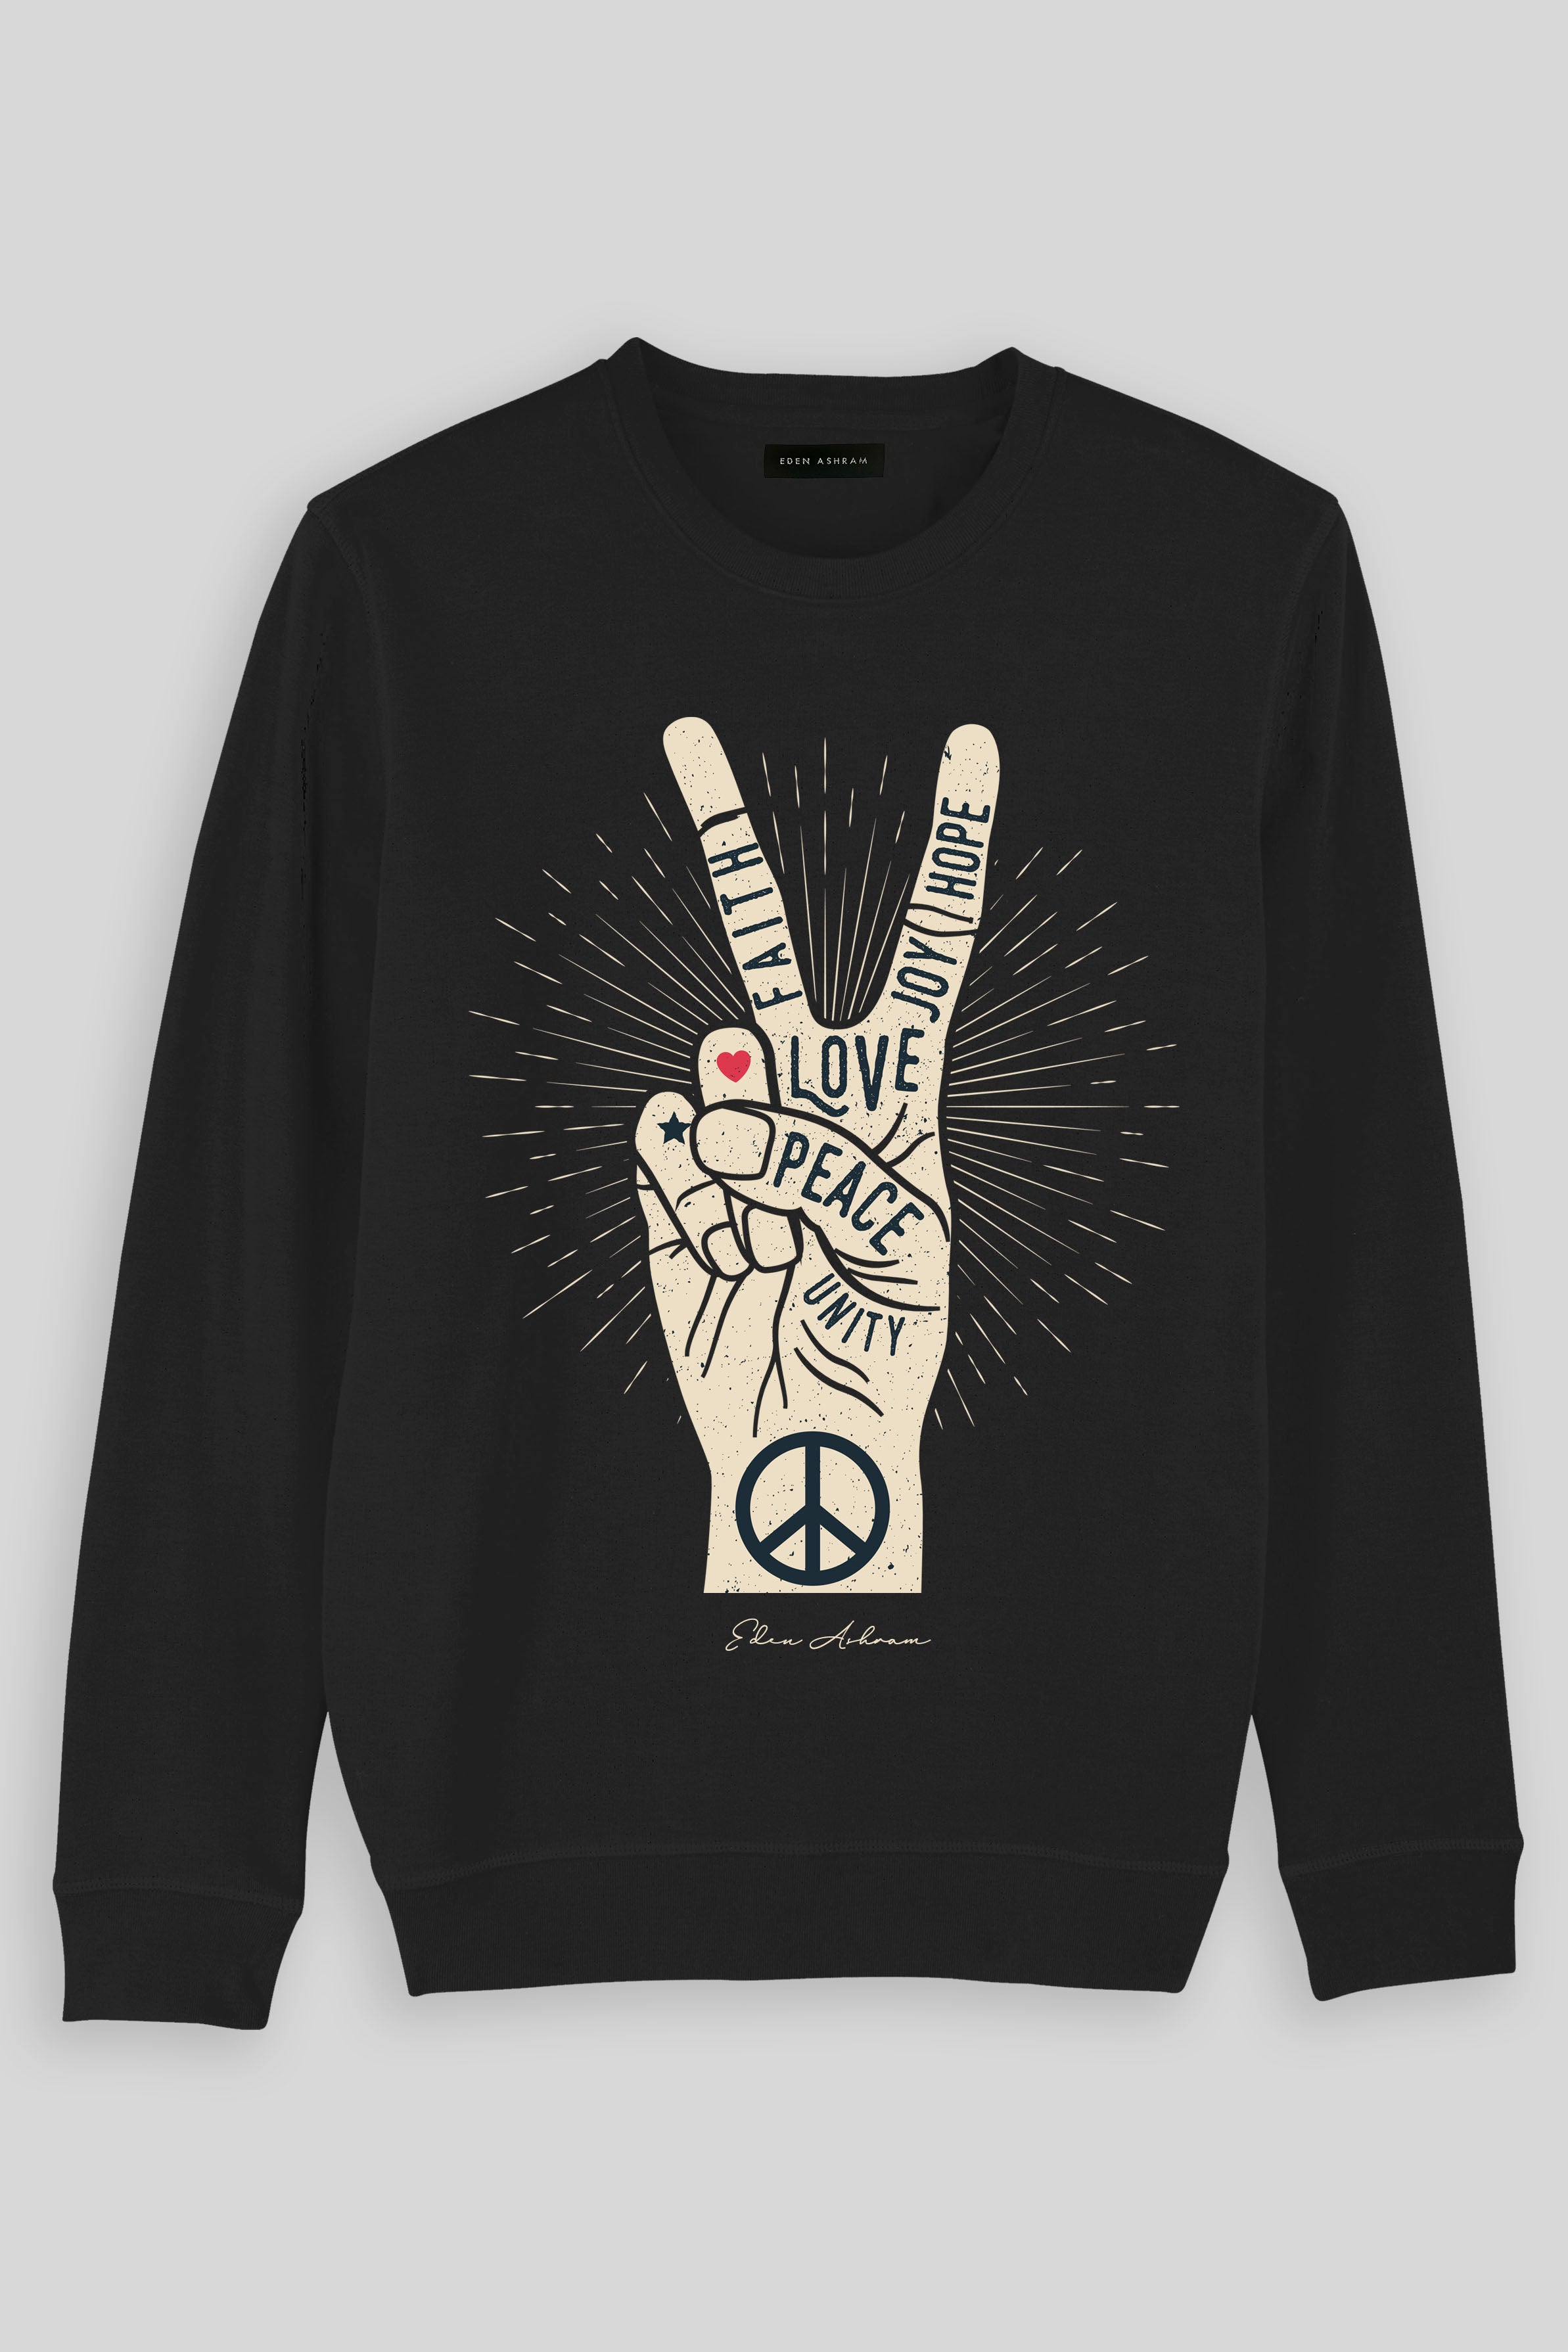 Eden Ashram Peace, Love, Unity, Faith, Joy & Hope Premium Crew Neck Sweatshirt Vintage Black